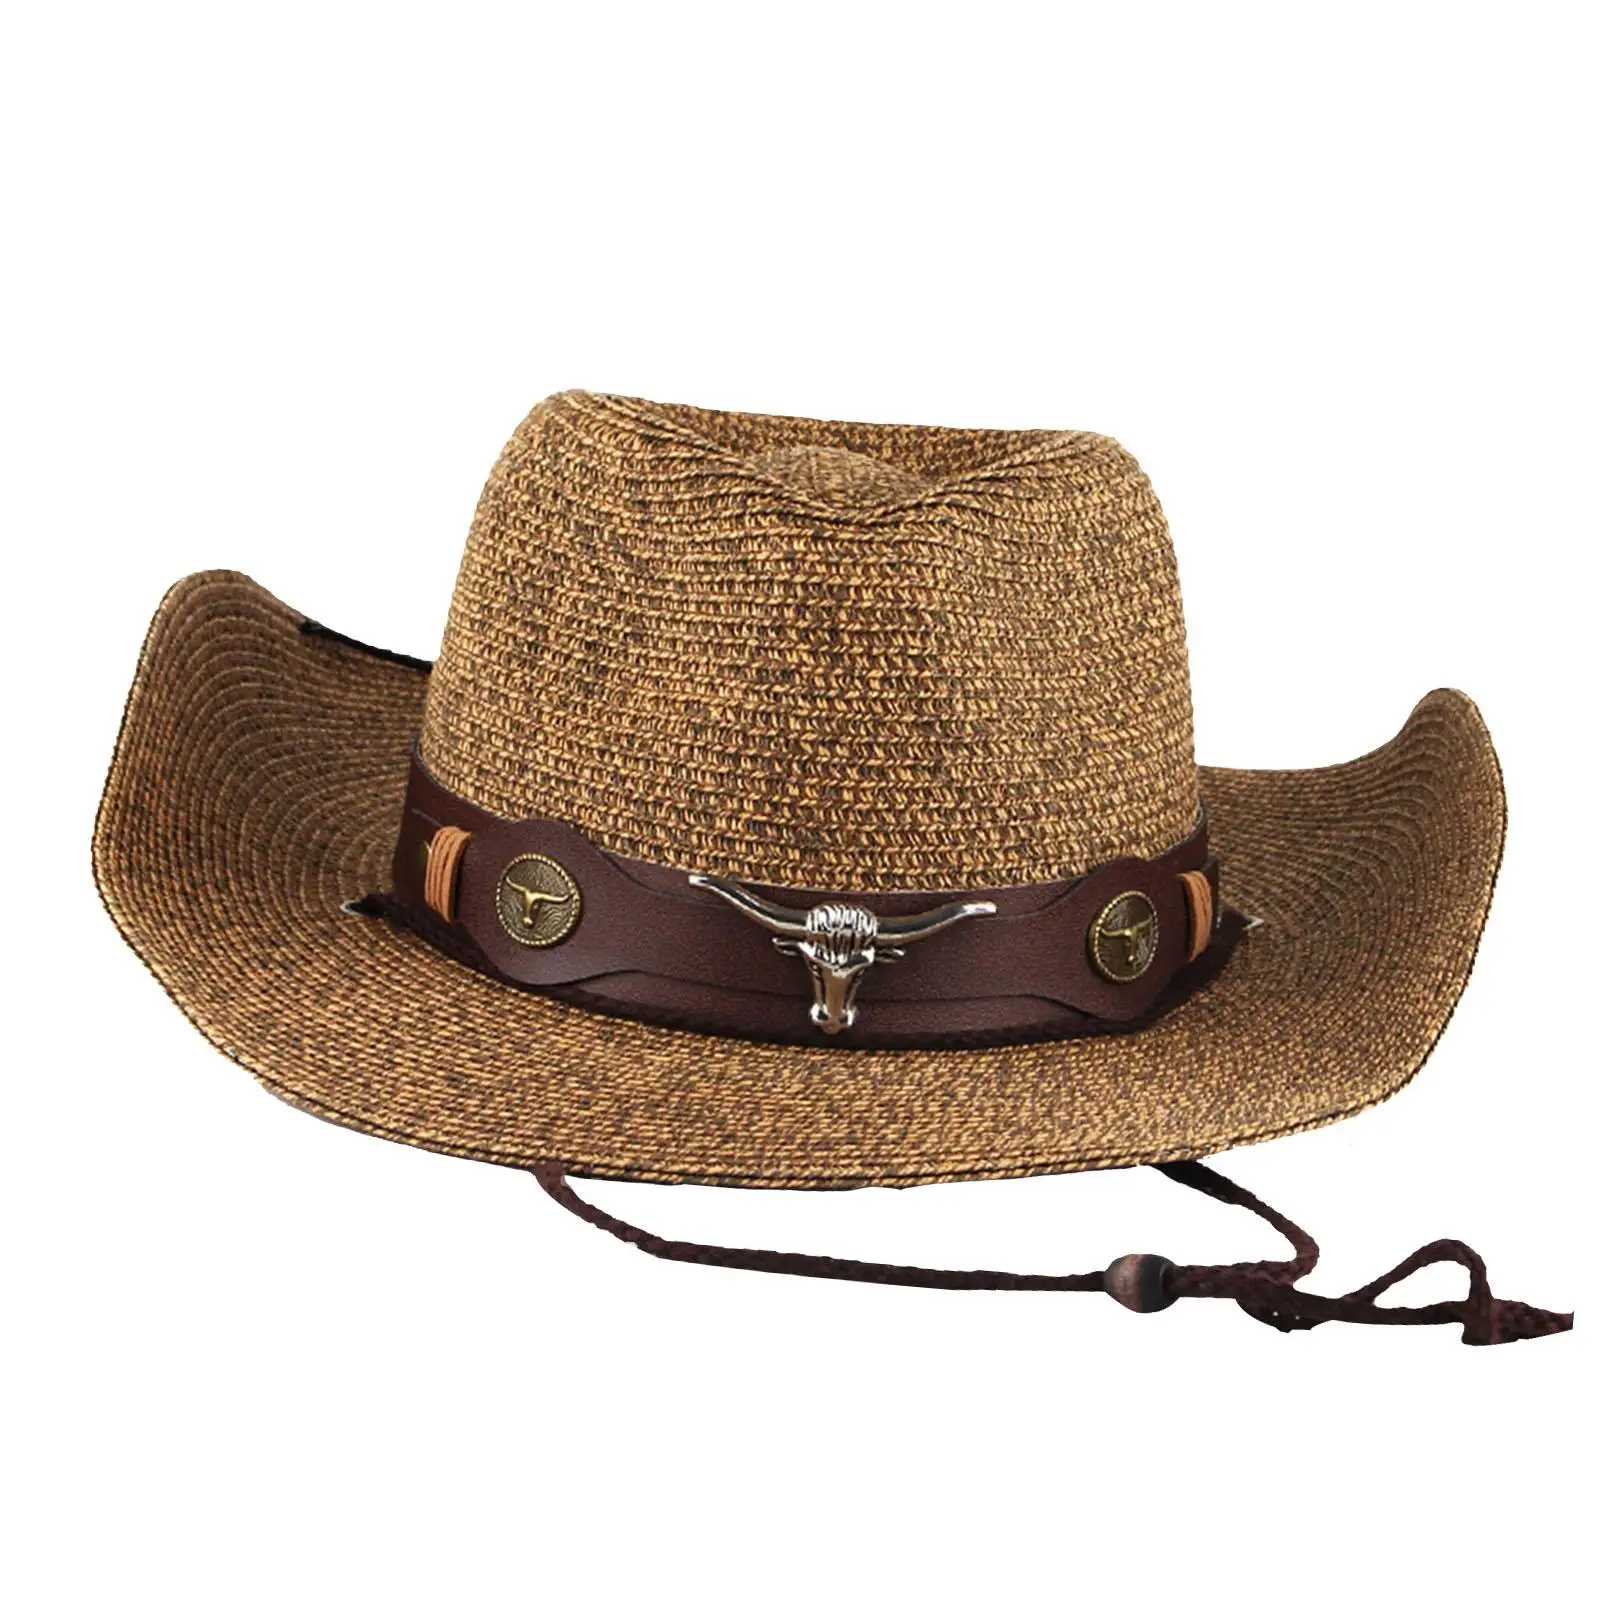 Straw Cowboy Hat Breathable Vintage Sombreros Vagueros Roll up Brim Cowboy Hat Cowboy Hats for Horseback Riding Travel Beach